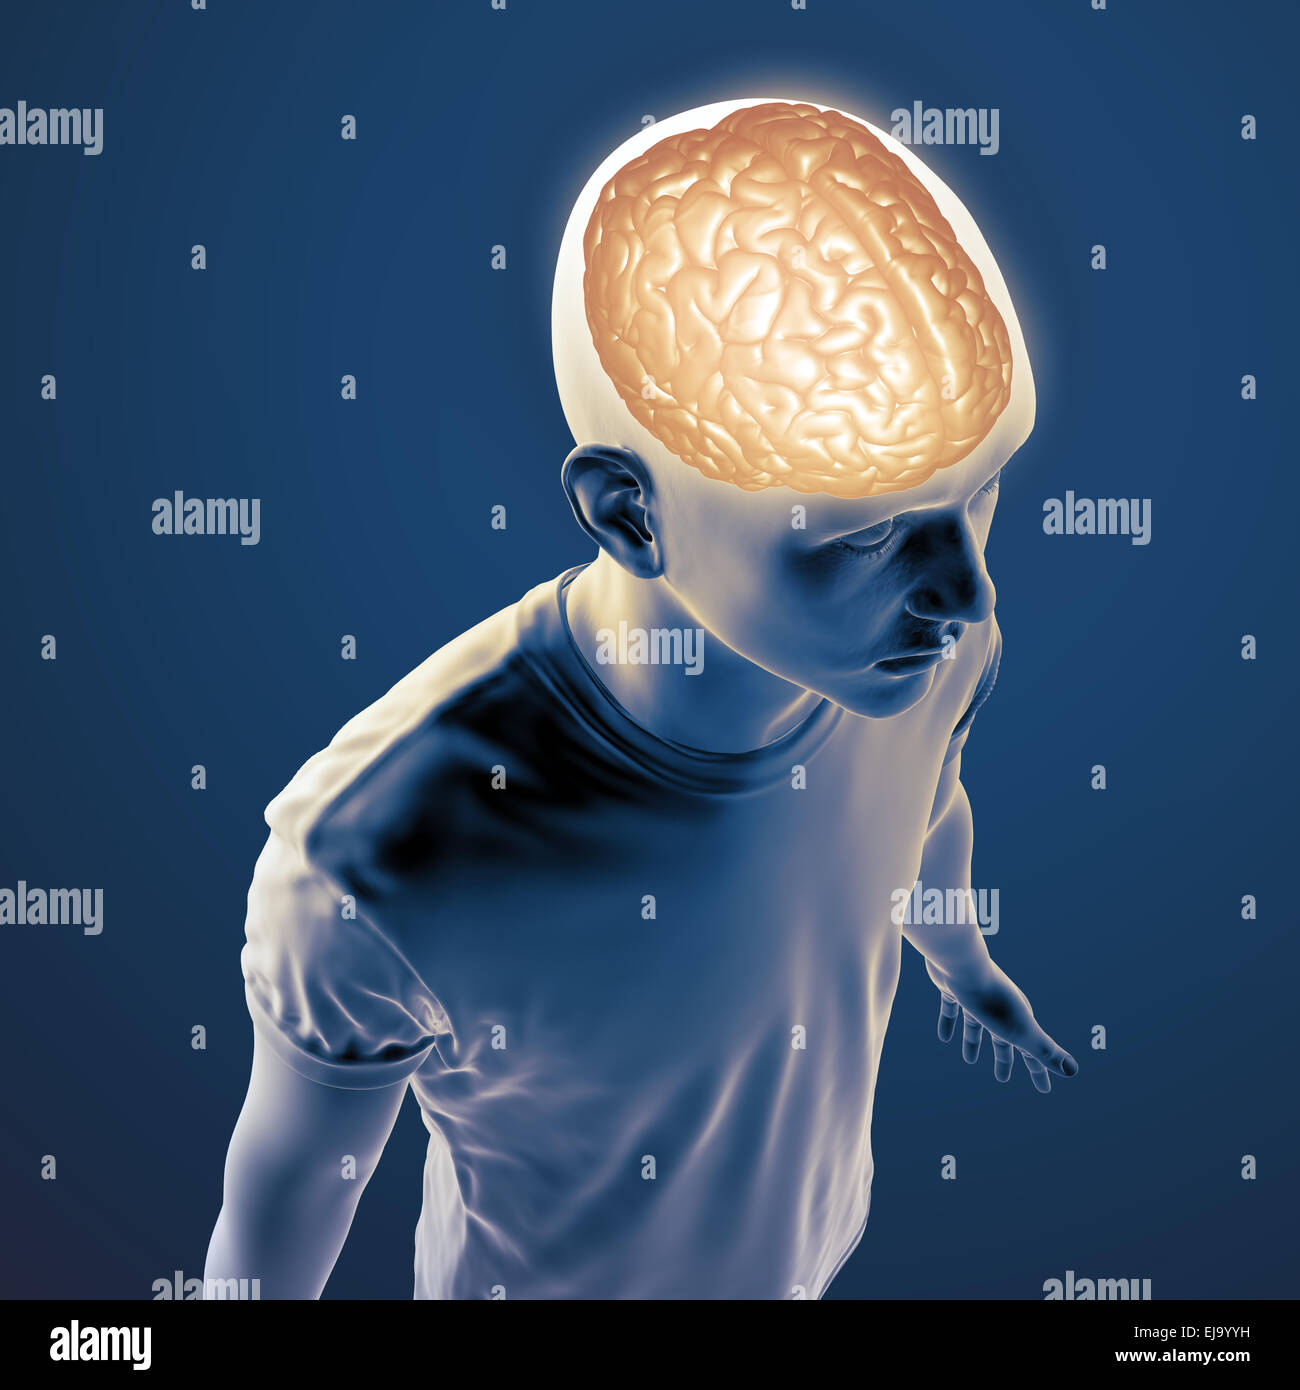 L'anatomie humaine illustration - système nerveux central Banque D'Images